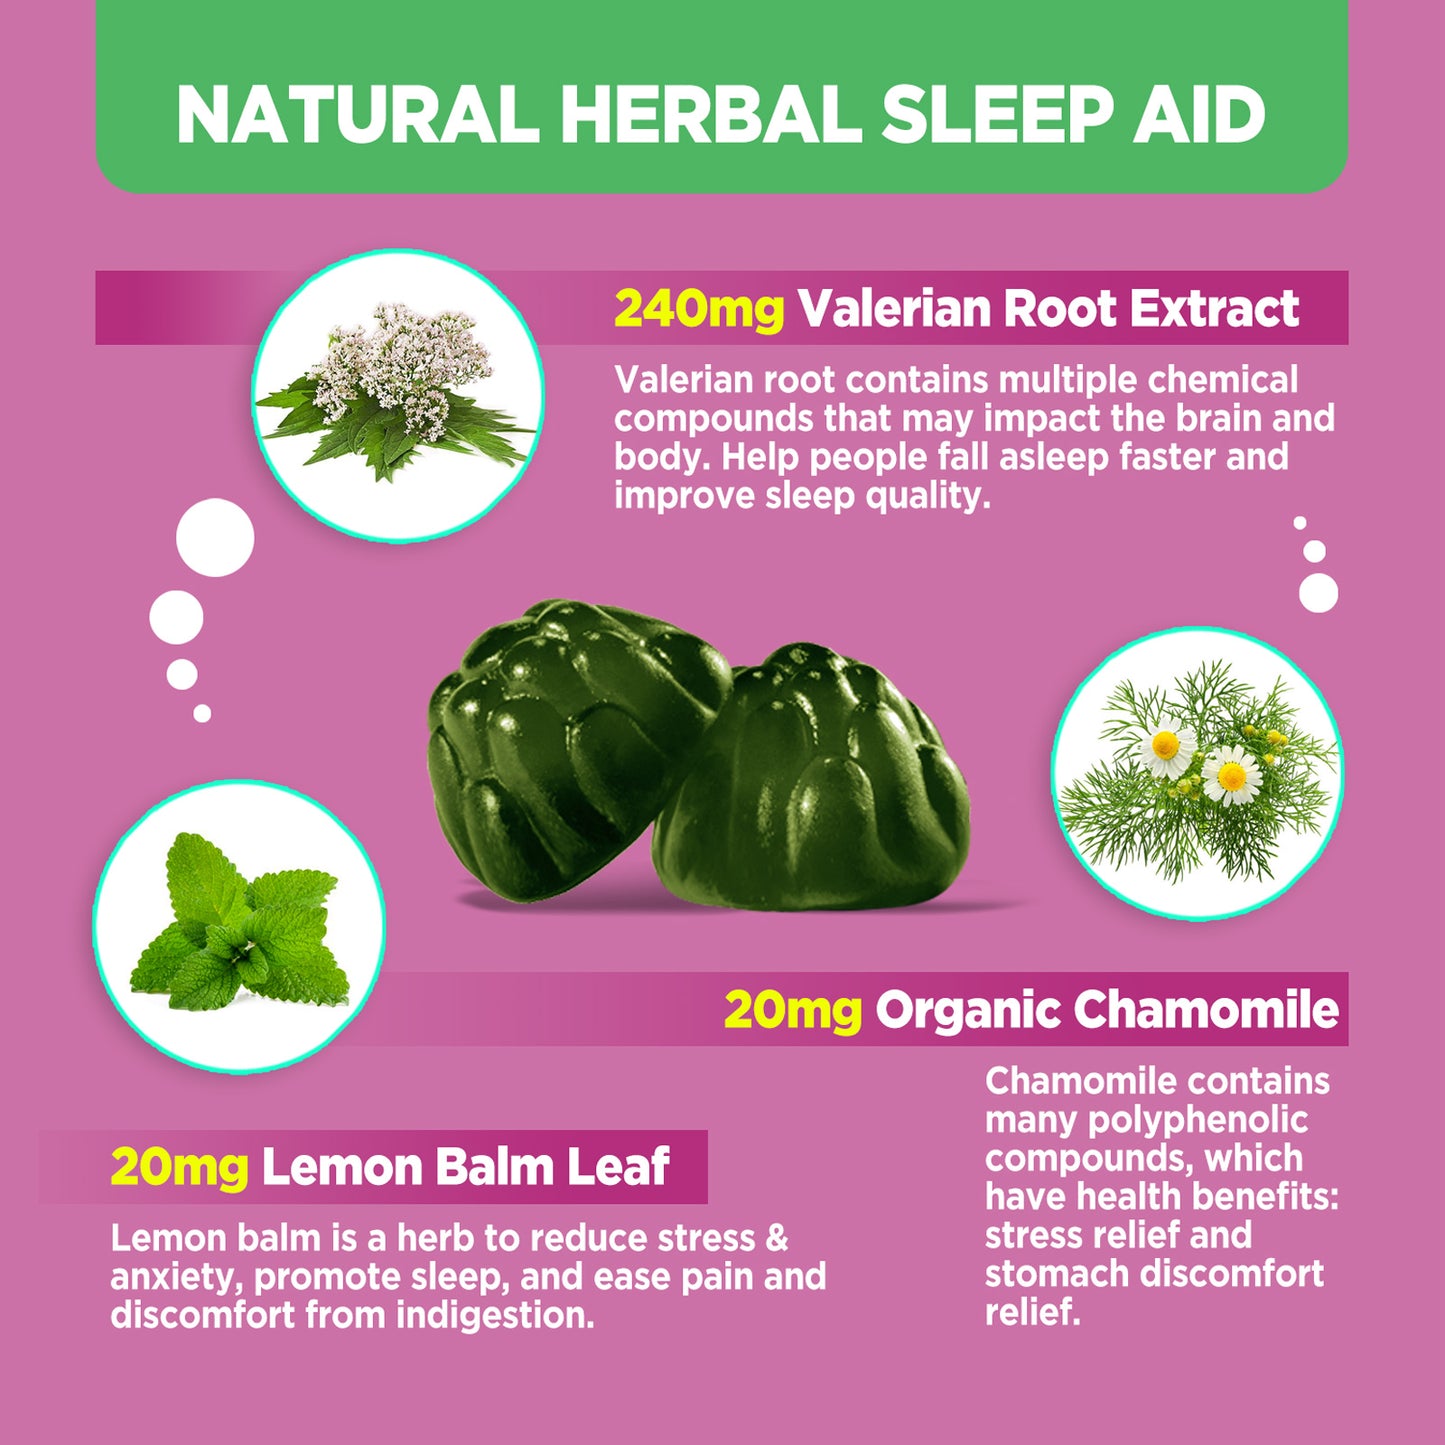 Valerian Root Gummies with Lemon Balm & Chamomile, Natural Sleep Support & Stress Relief Herbal Supplements, No Melatonin, Organic, Vegan, Non-GMO, 60 Chewables